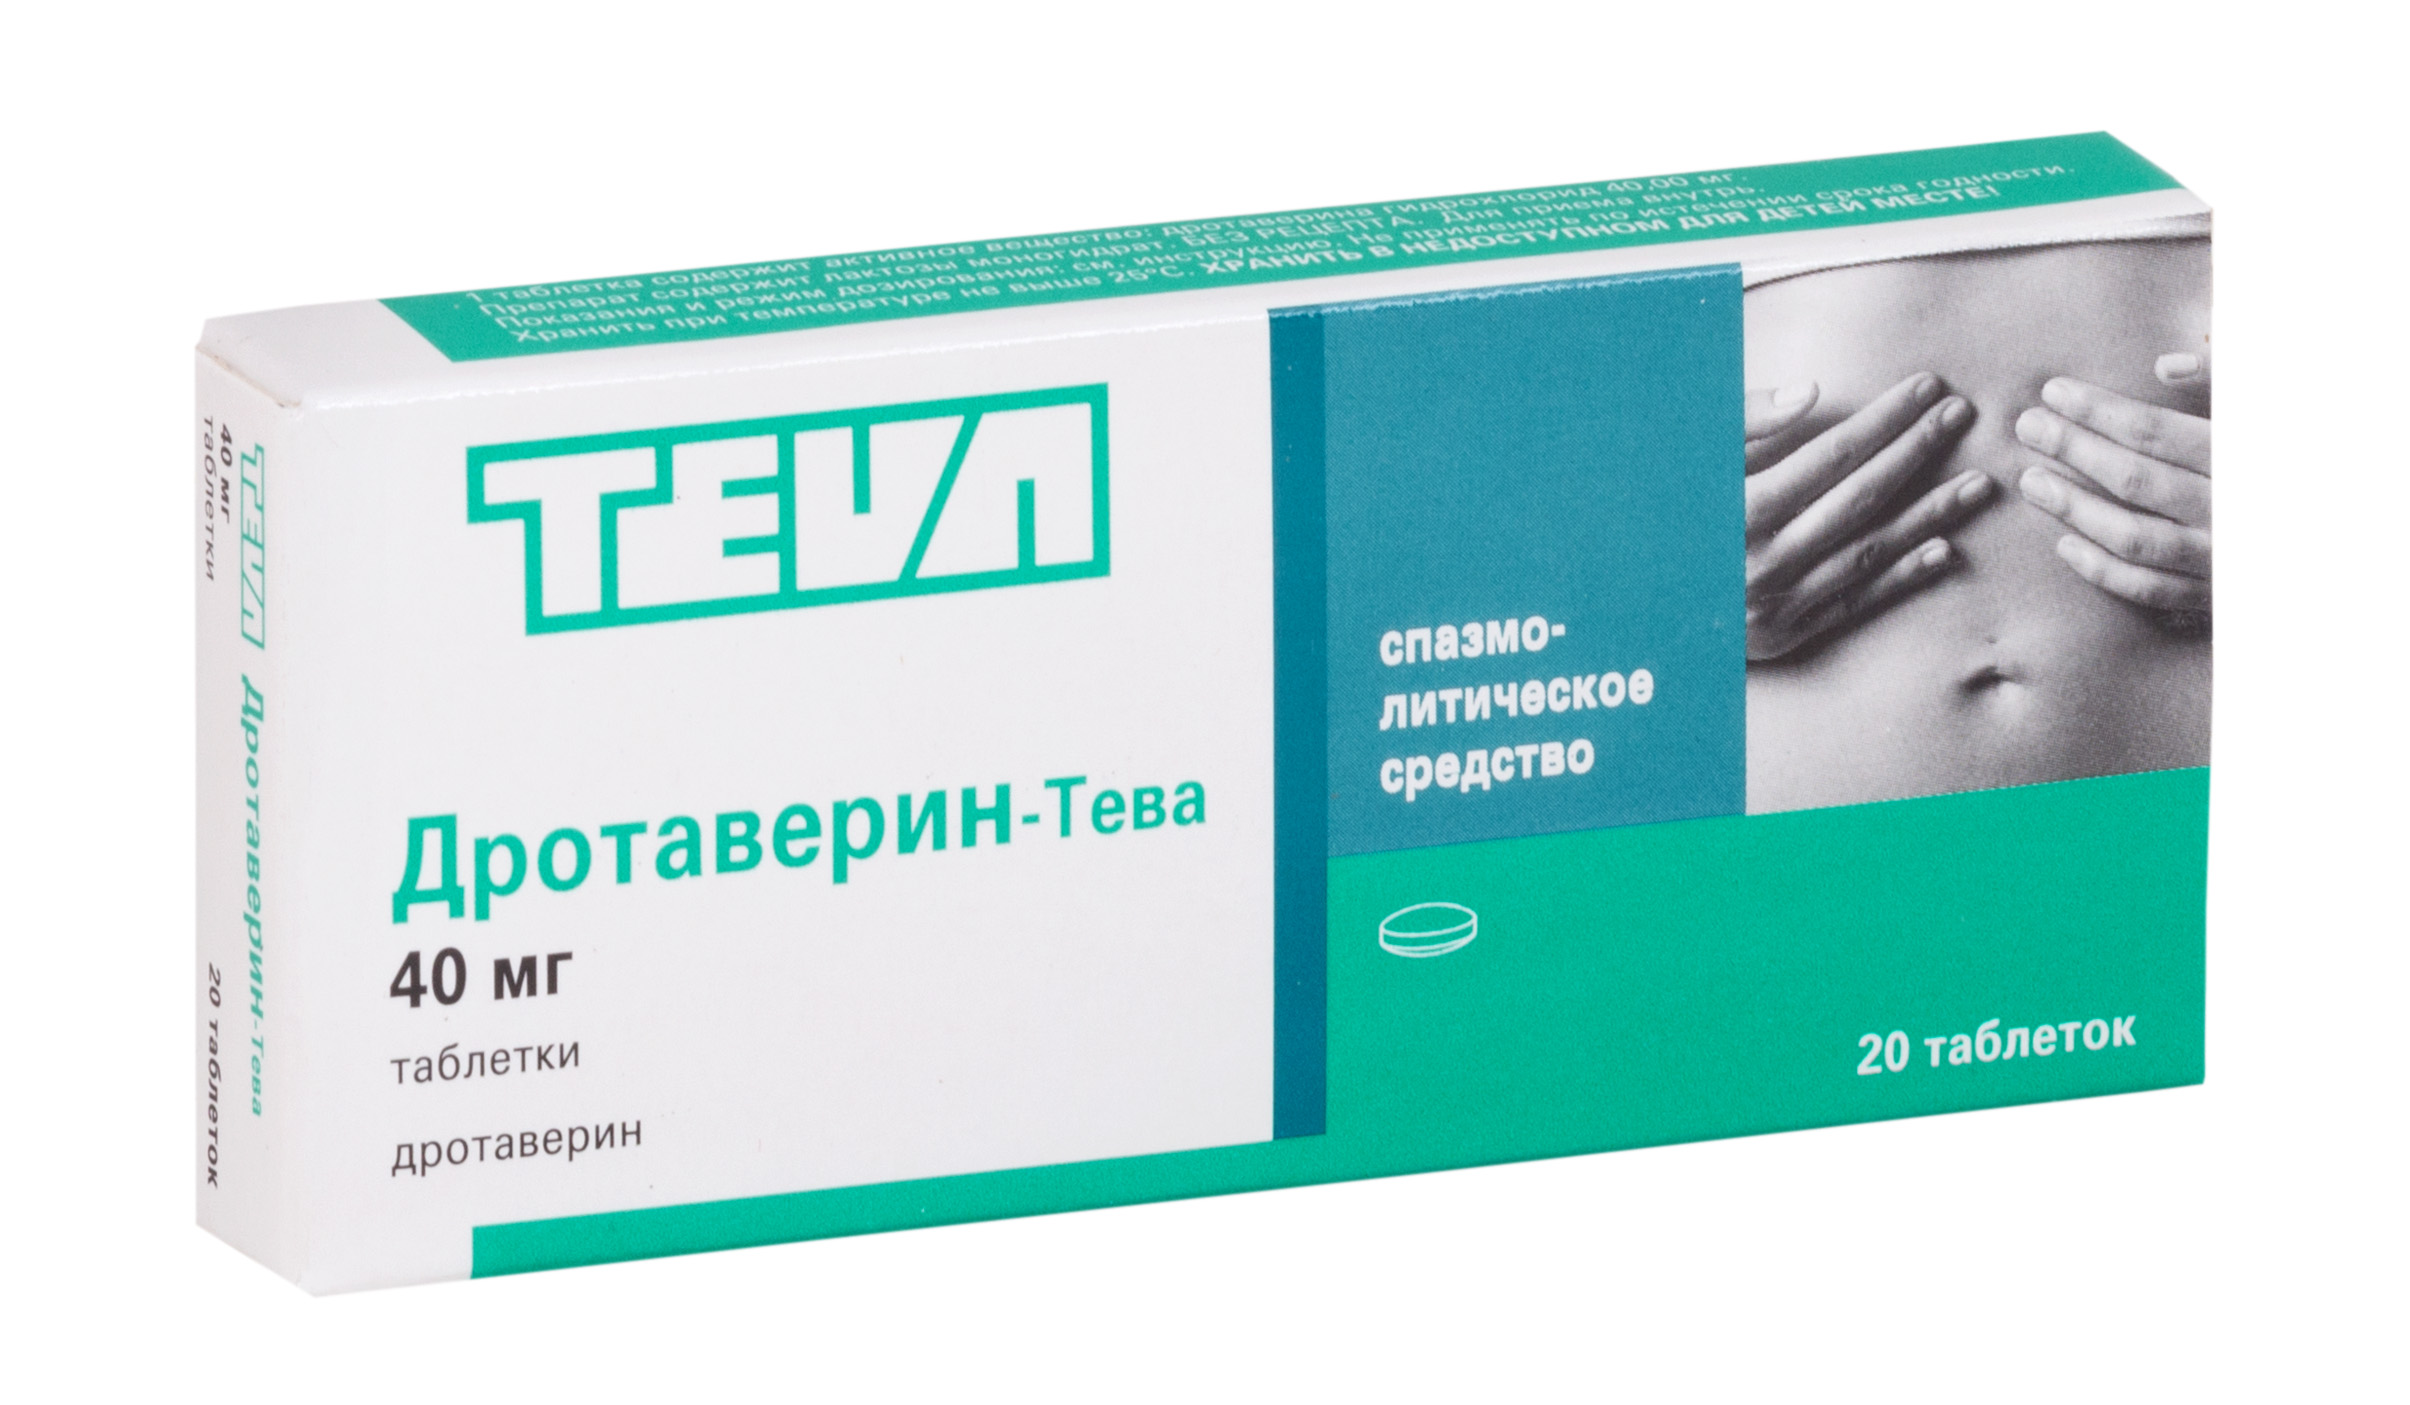 Aptekirls :: Дротаверин-Тева табл. 40 мг №20 — заказать онлайн и .